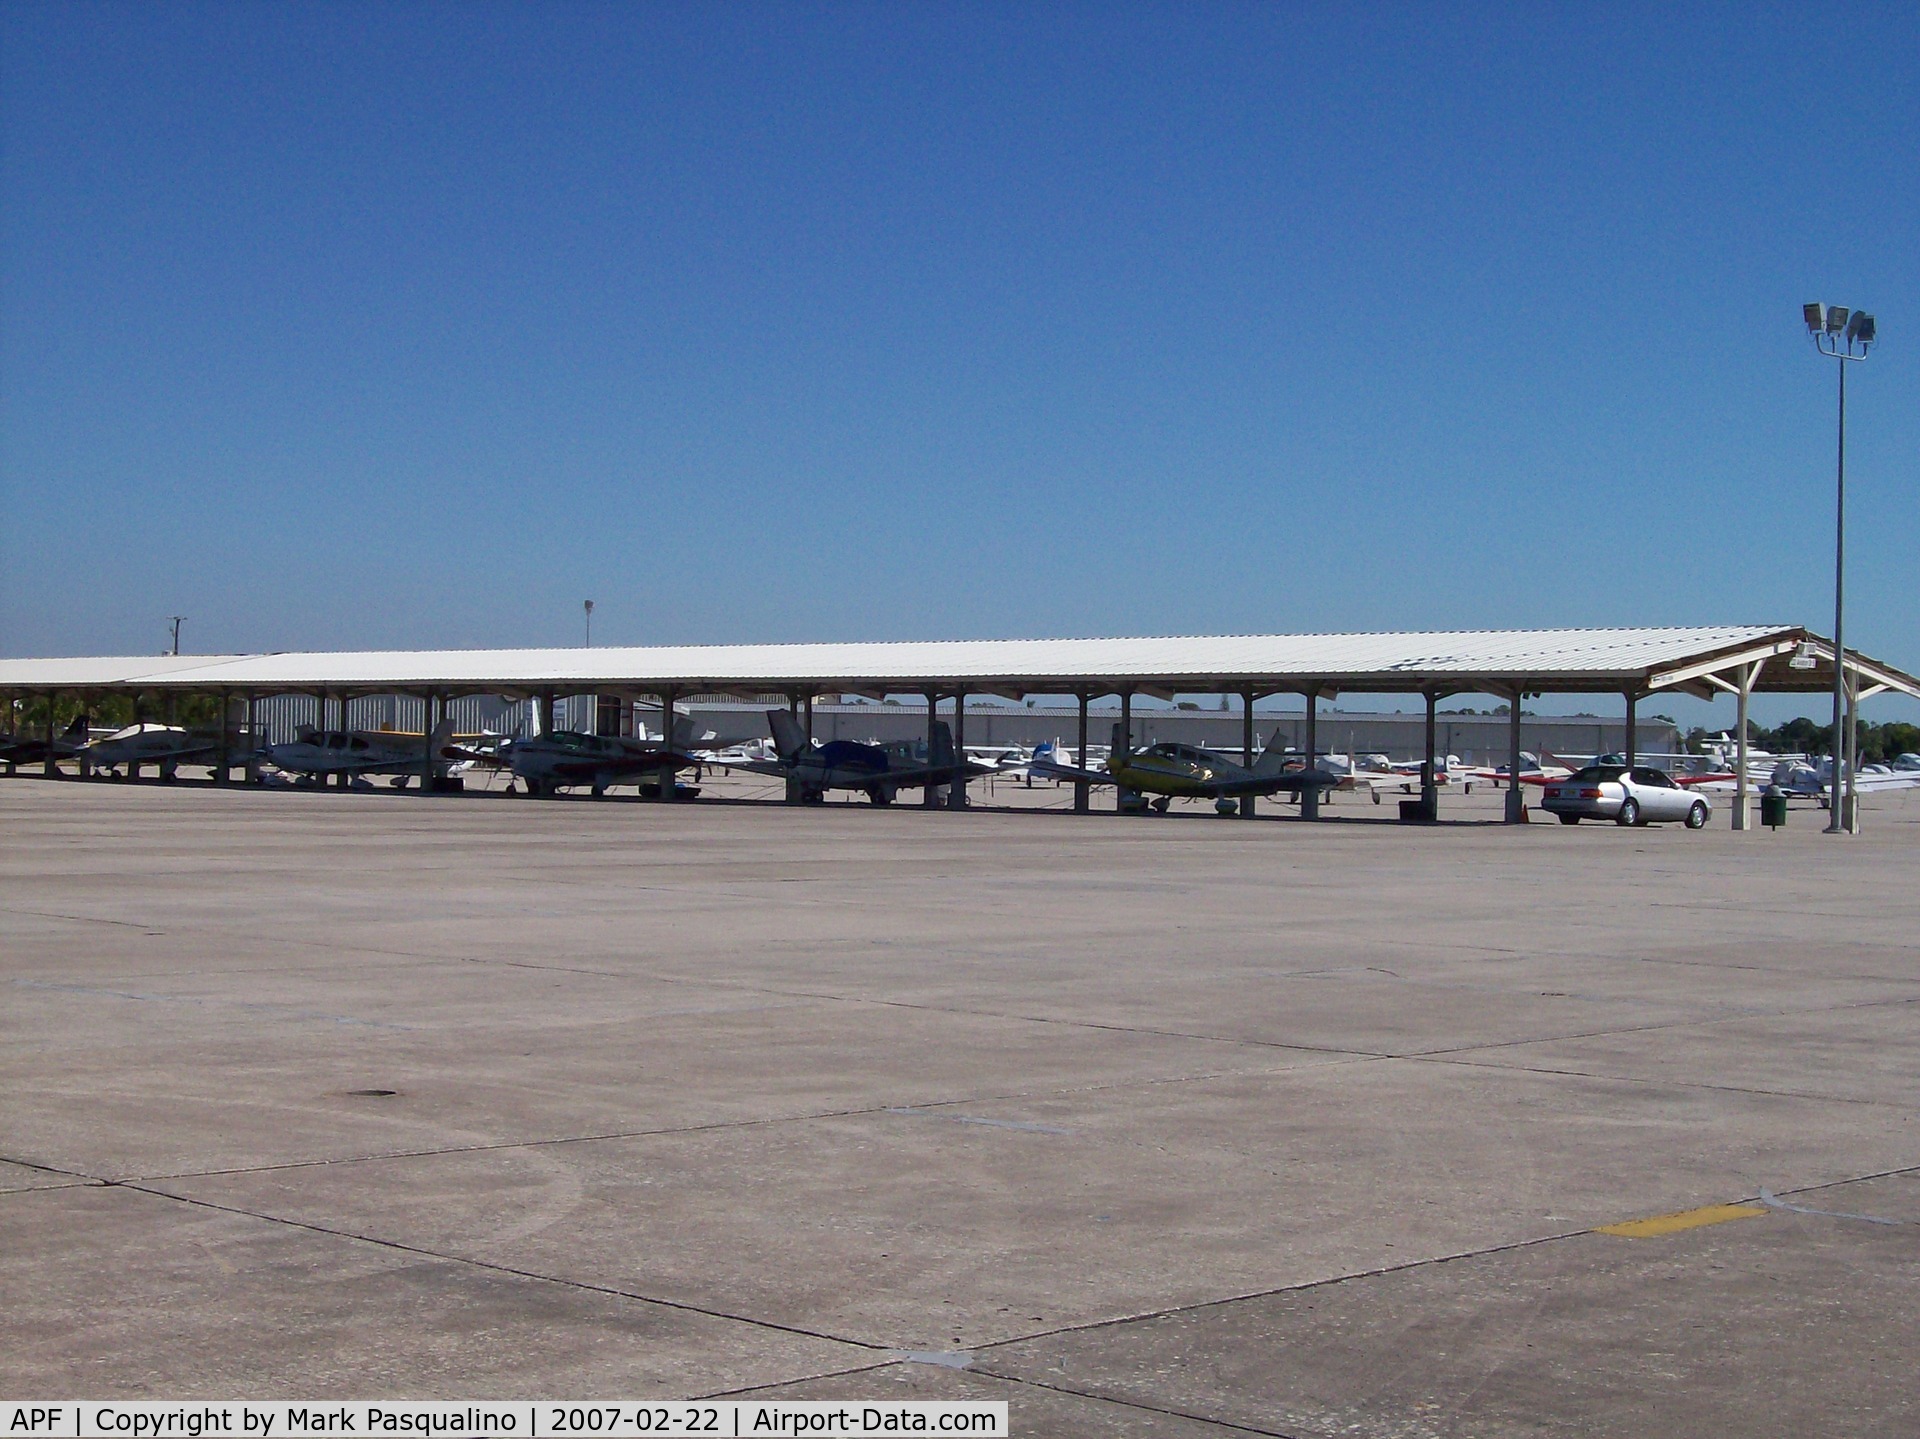 Naples Municipal Airport (APF) - Open hangar at Naples, FL